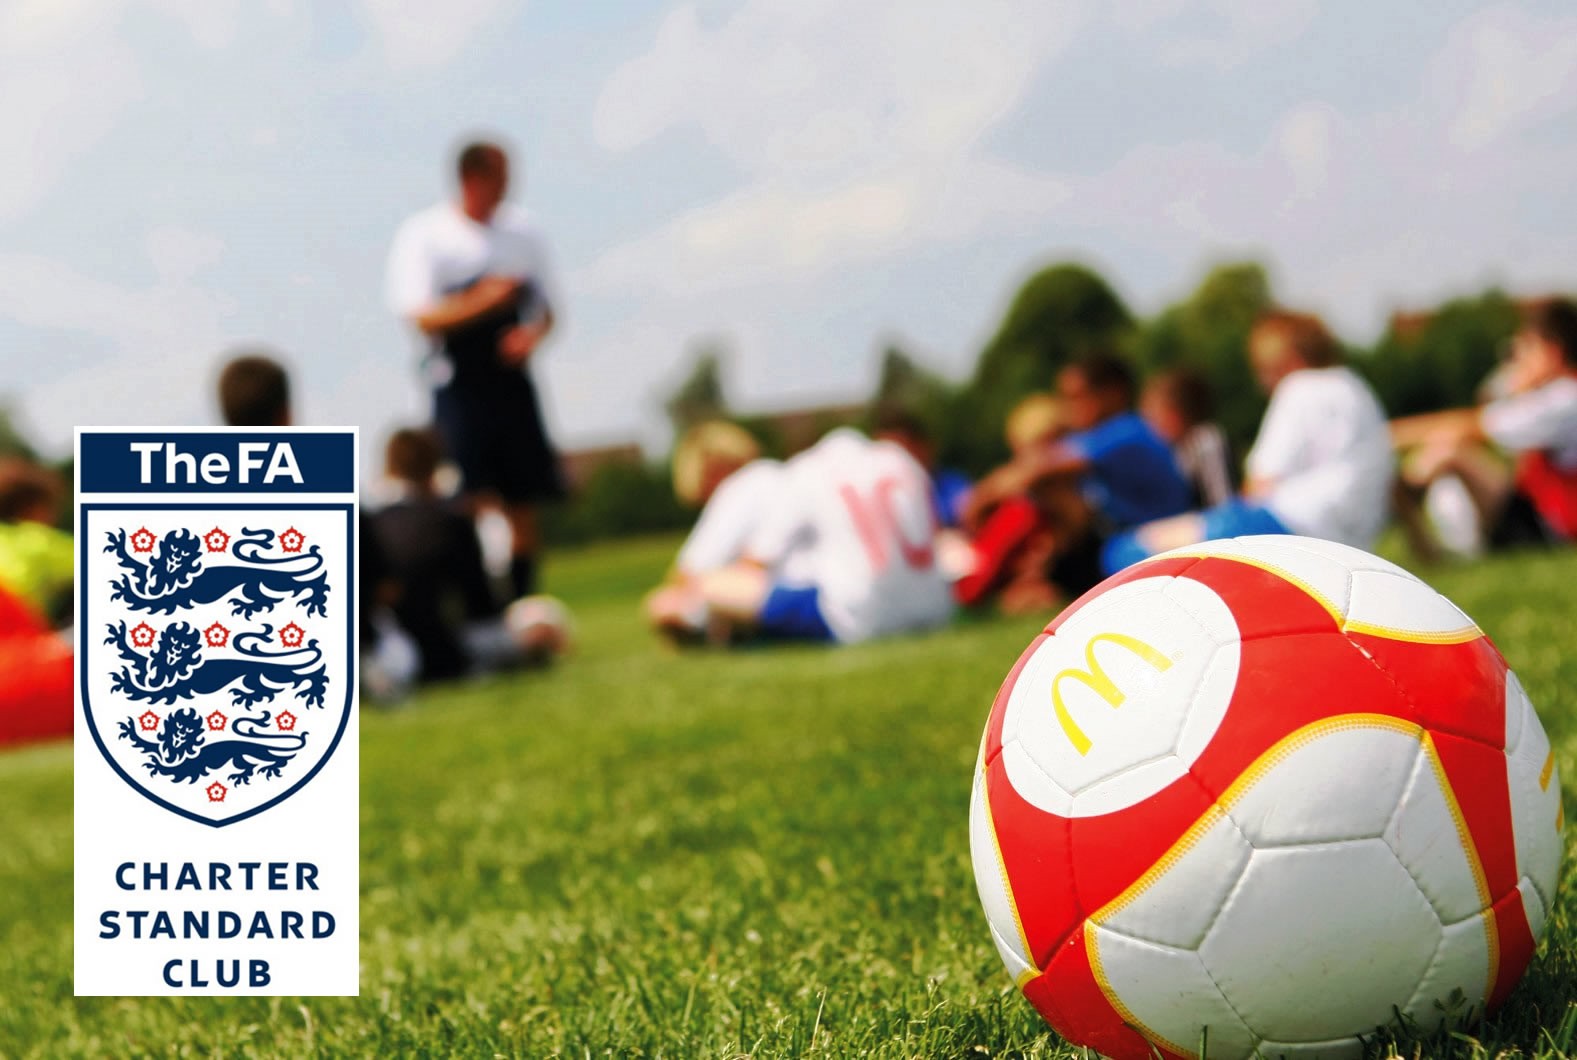 Should grassroots football clubs consider Charter Standard accreditation?